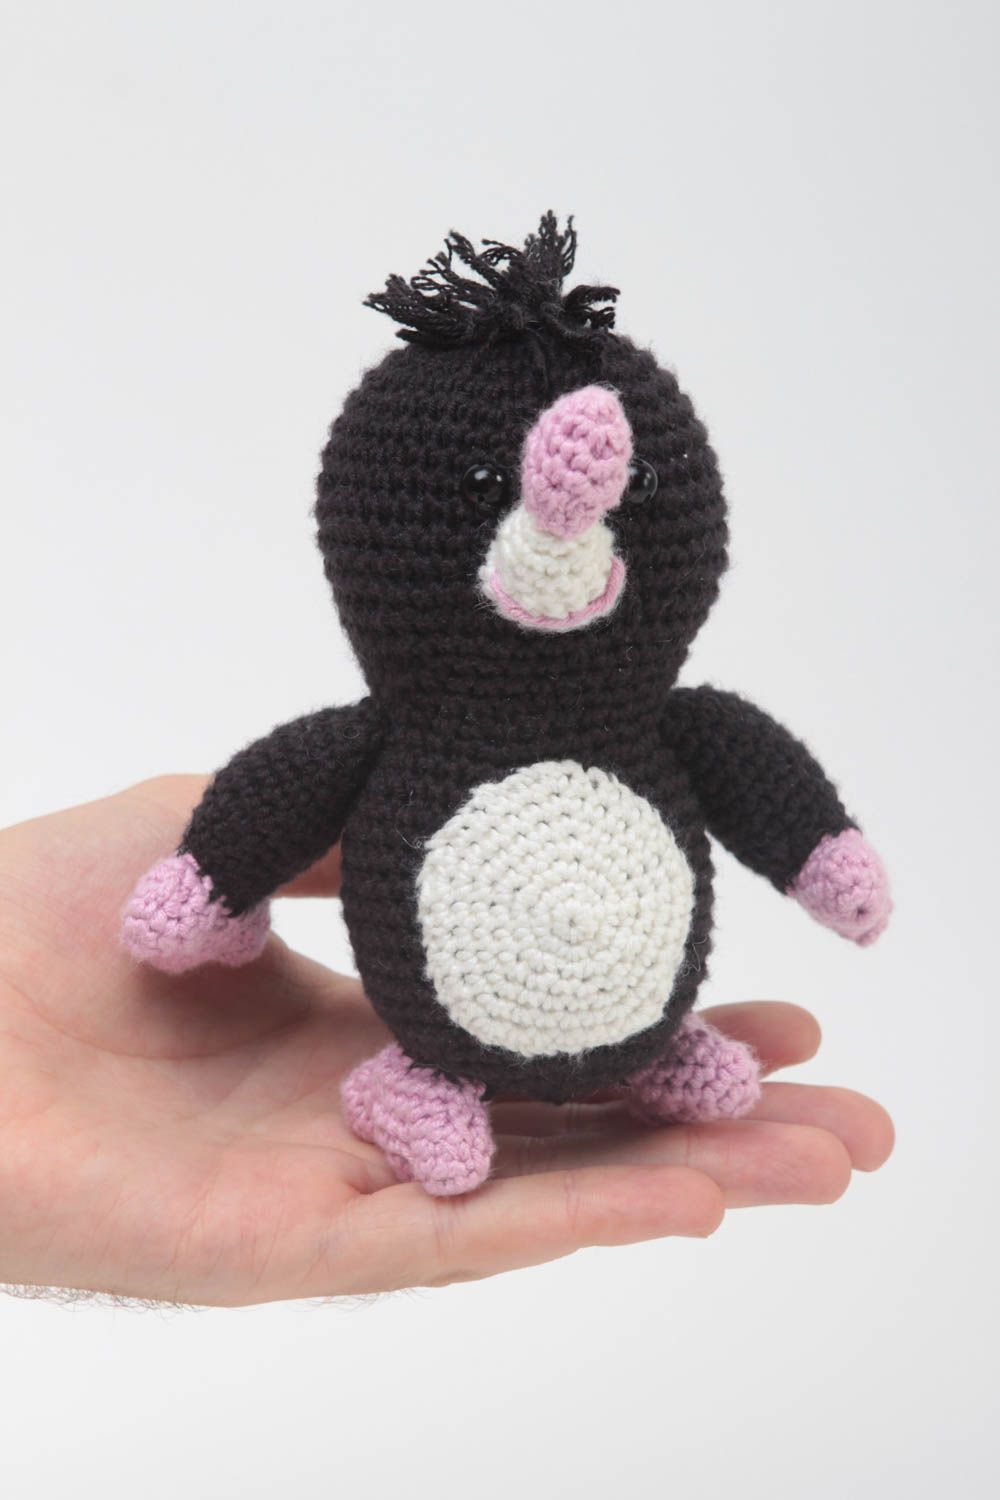 Miniature handmade soft toy stuffed toy crochet toy birthday gift ideas photo 5